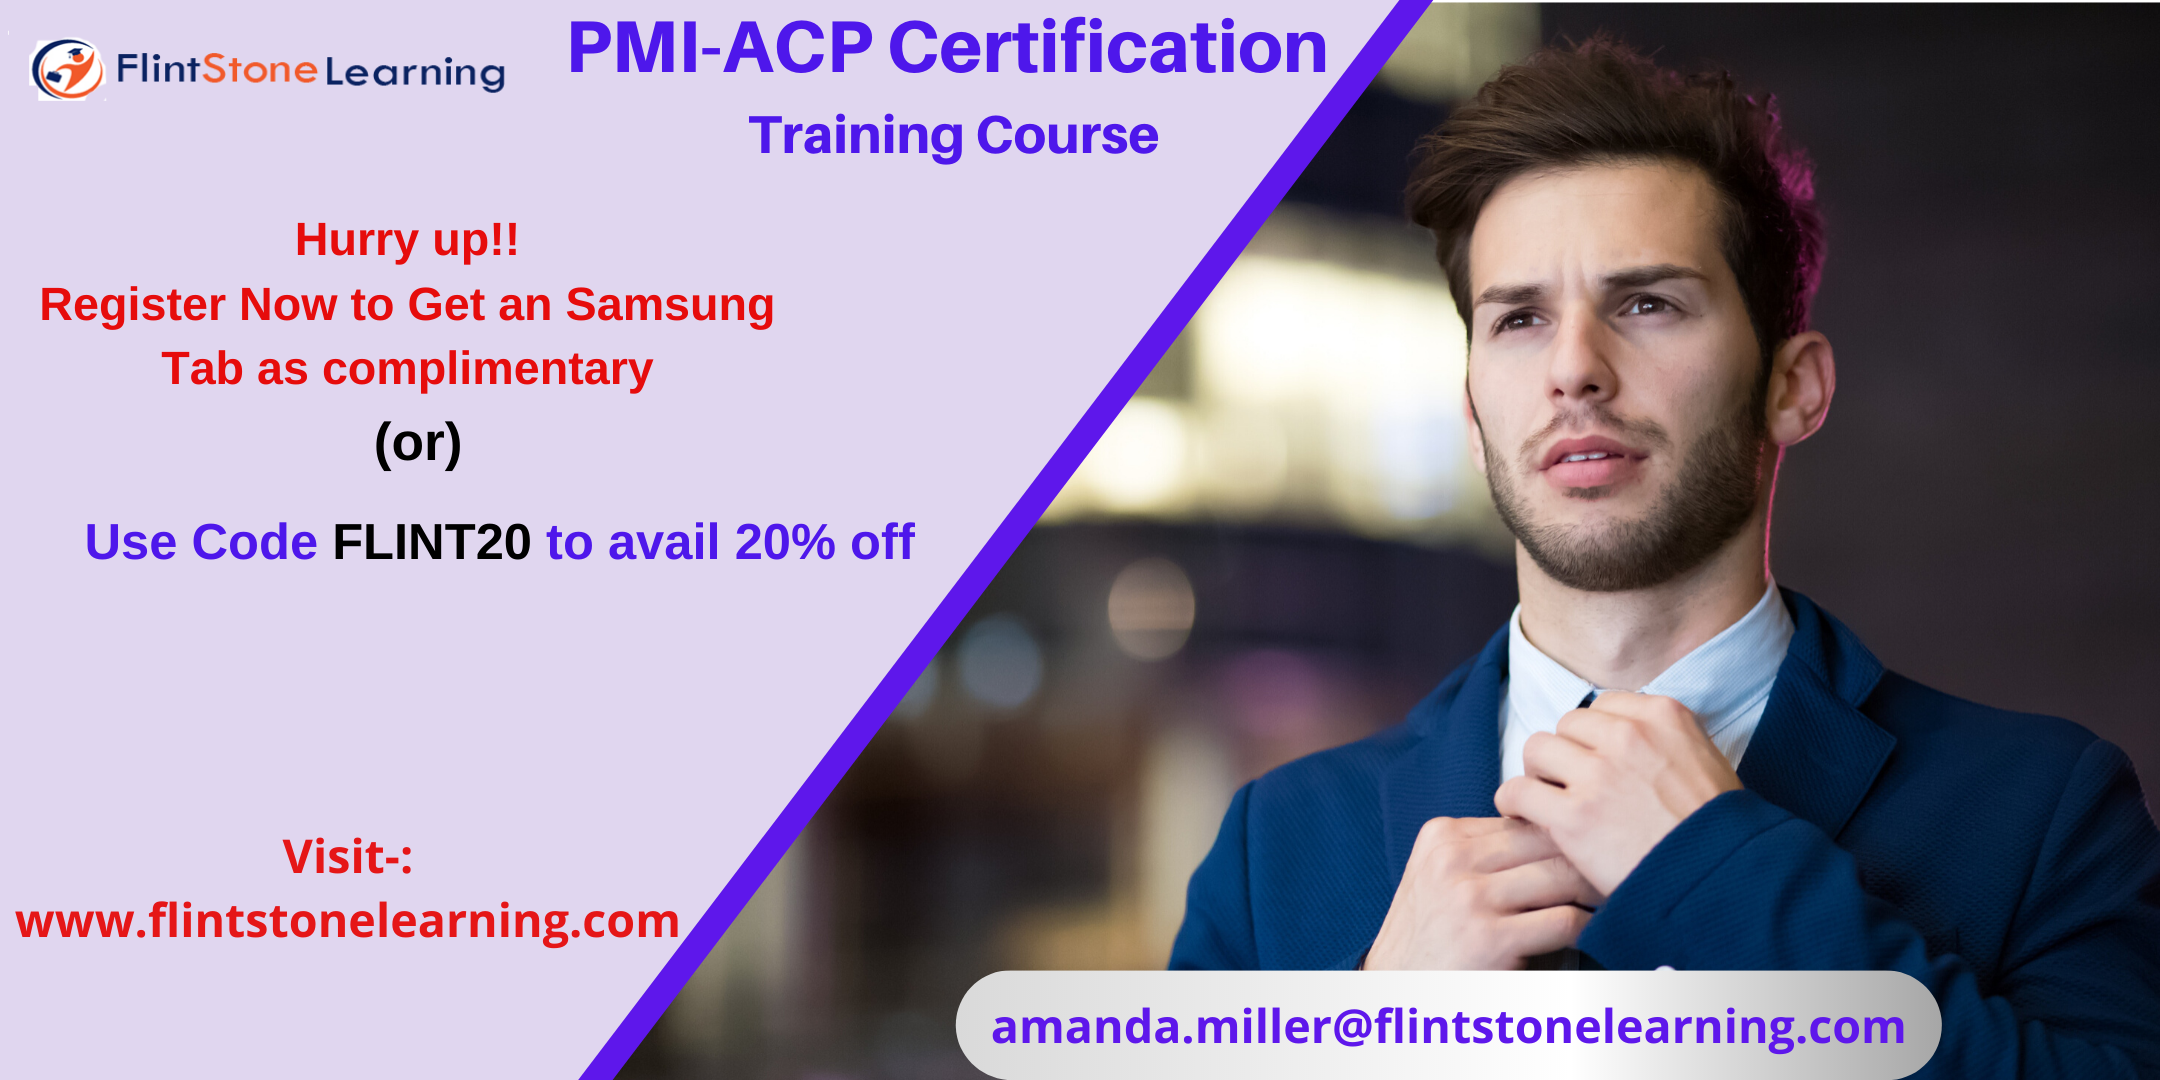 PMI-ACP Certification Training Course in Alameda, CA